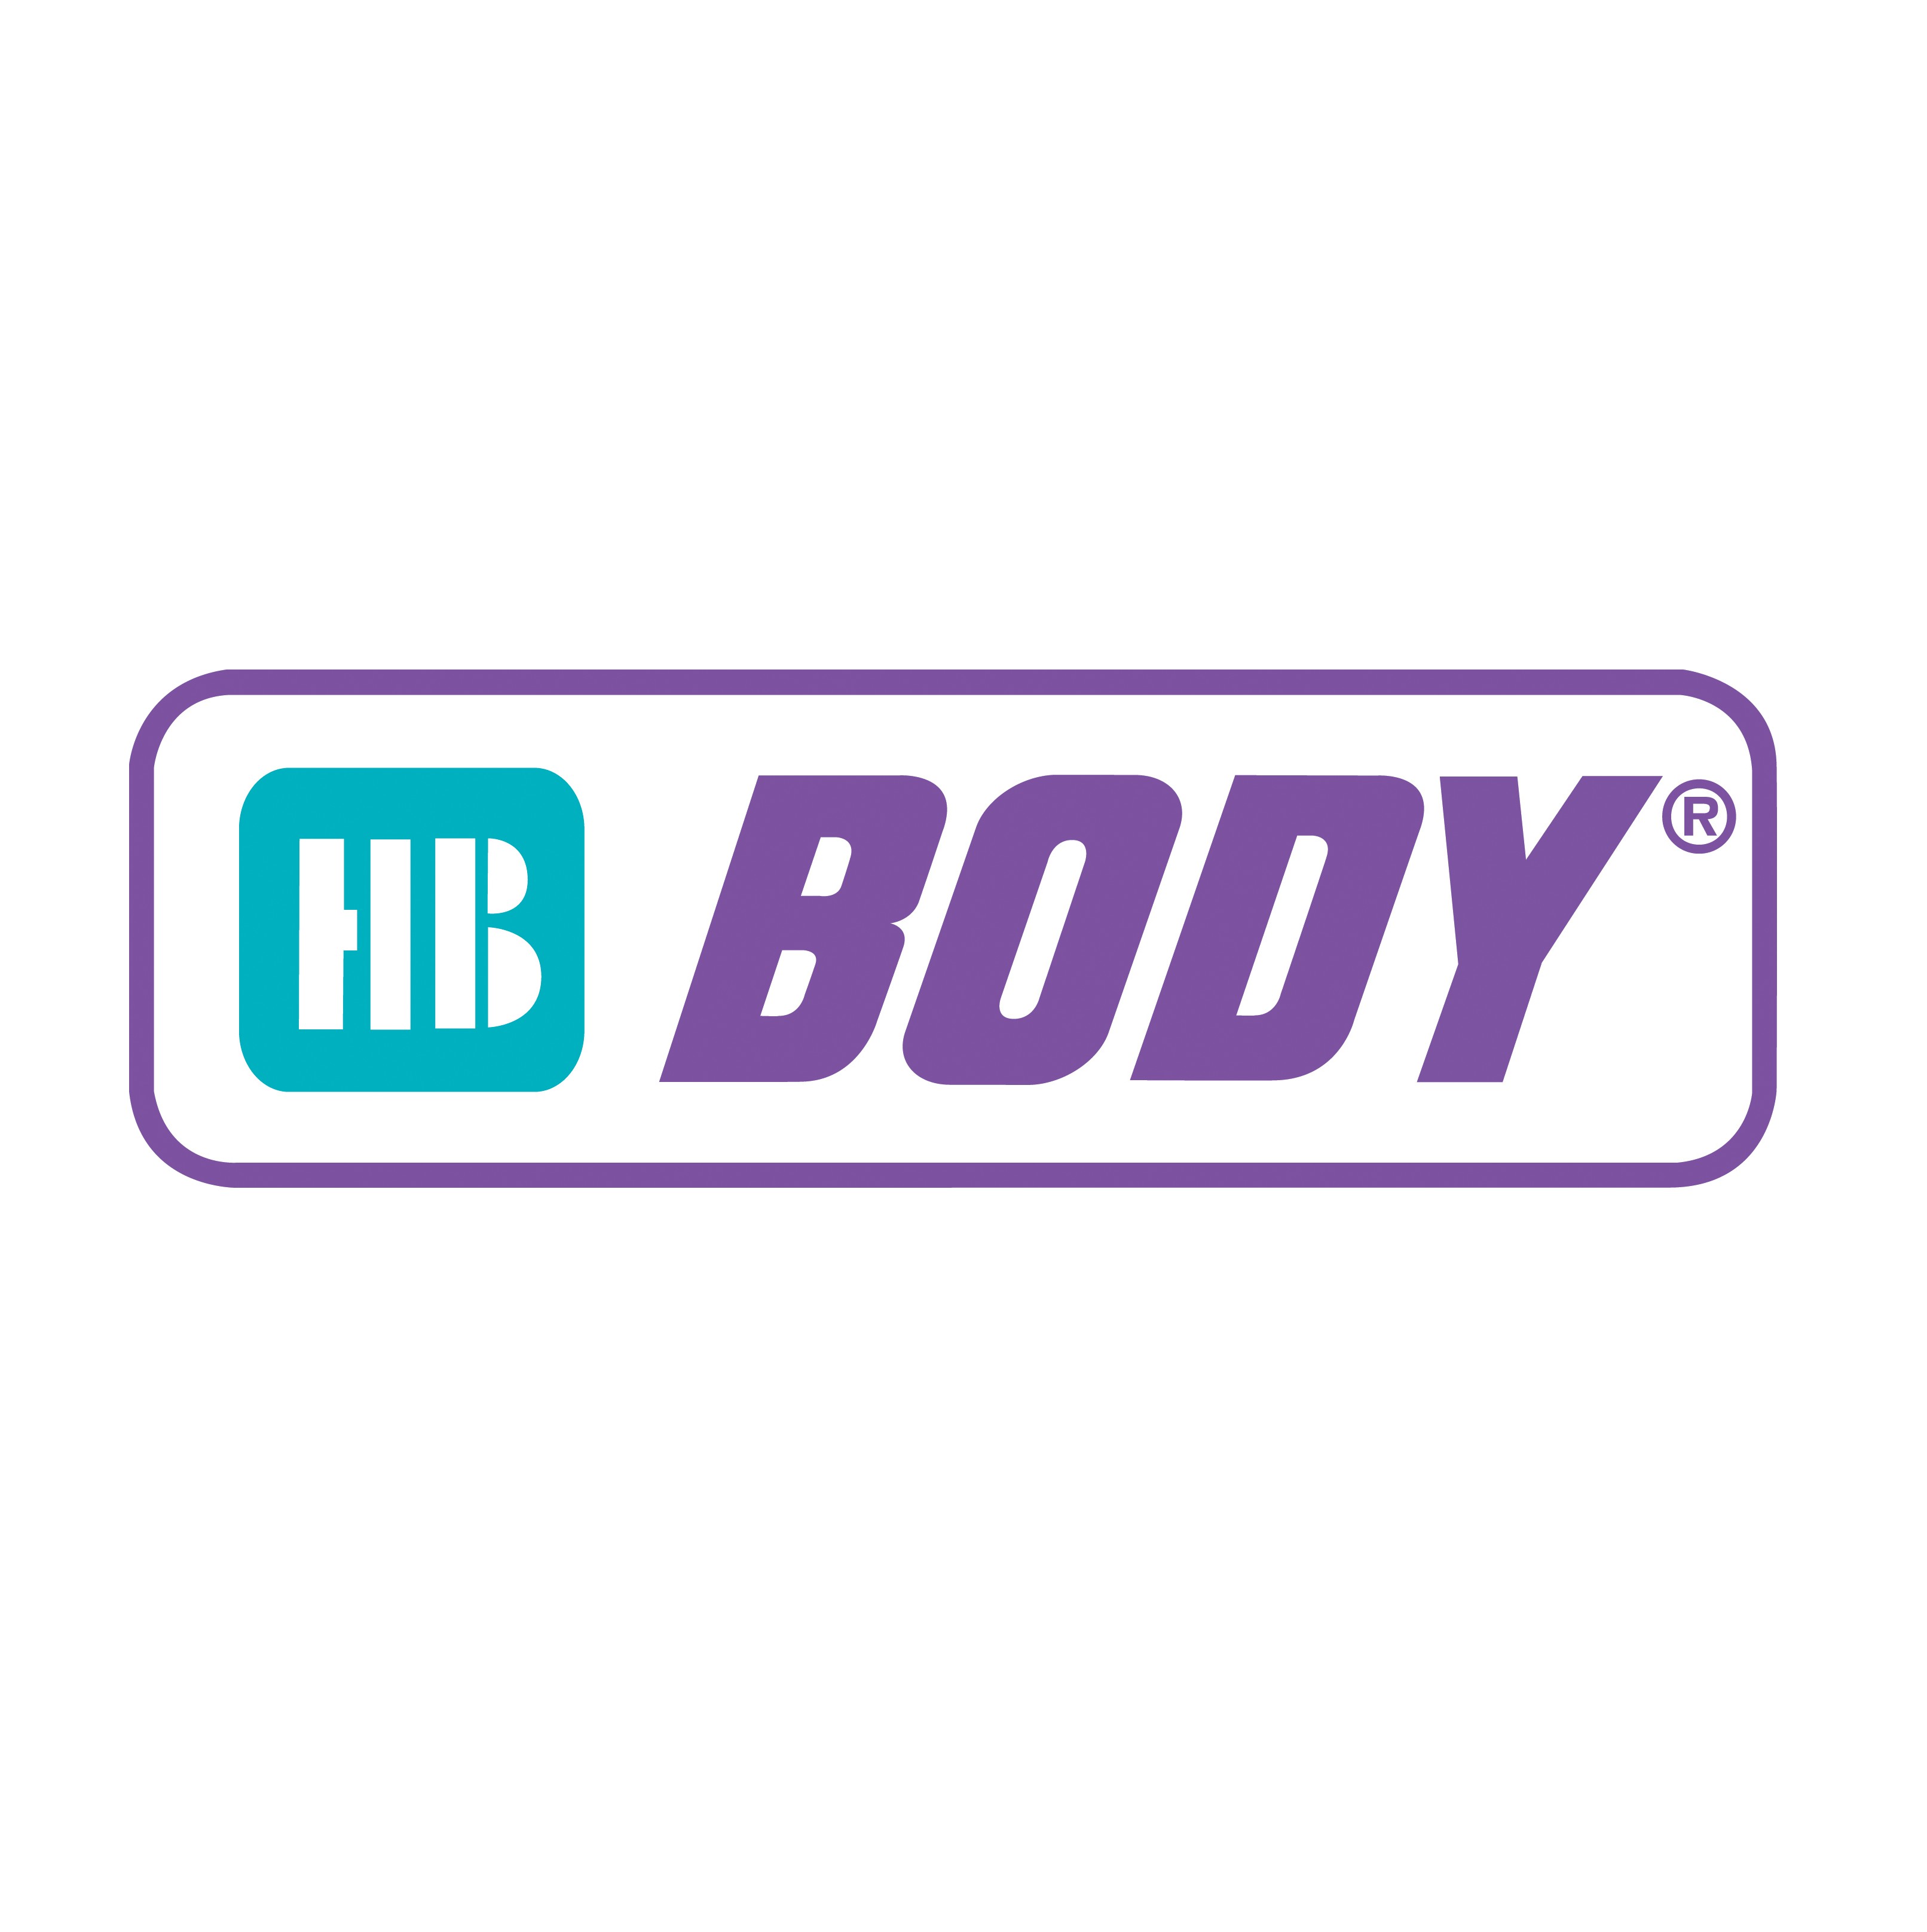 HB-body